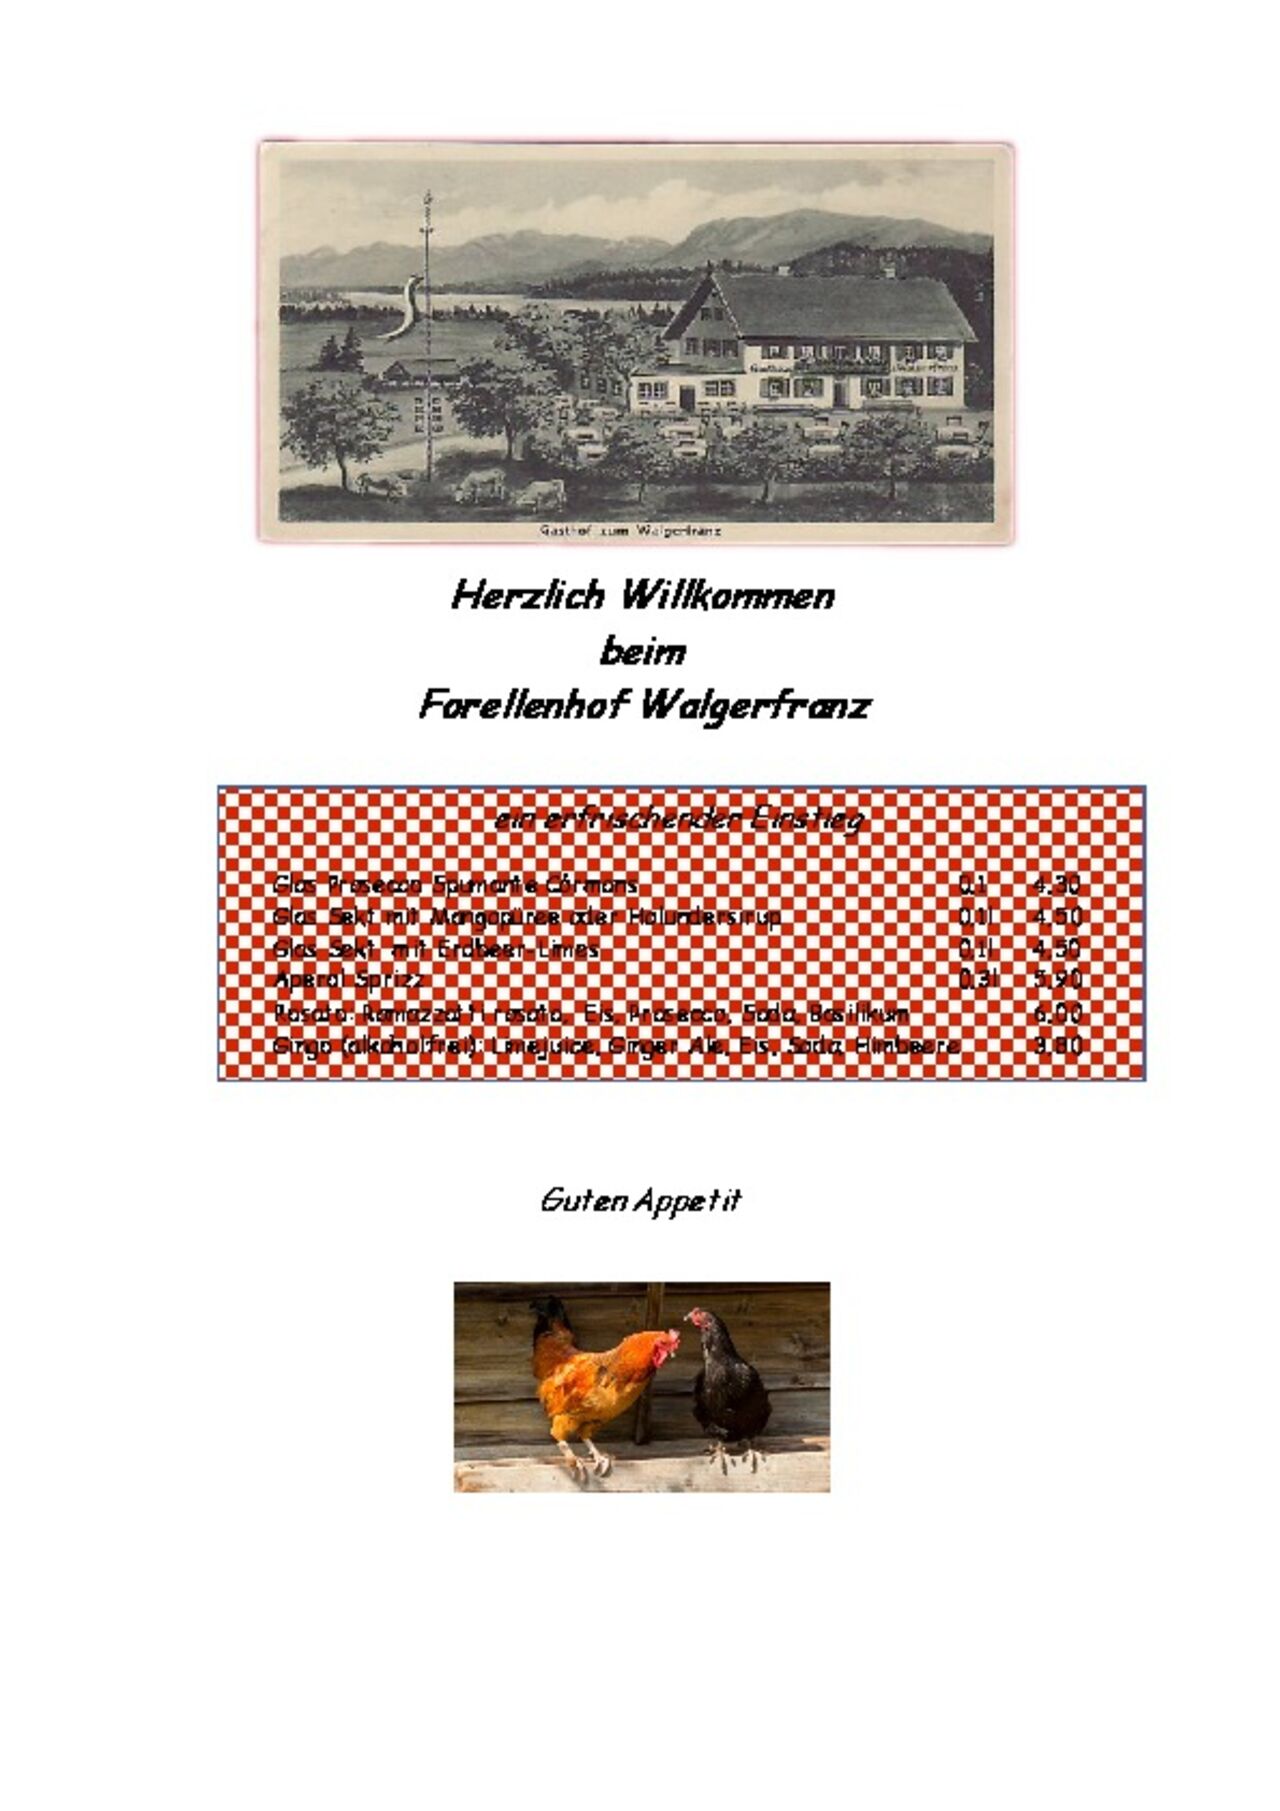 A photo of Forellenhof Walgerfranz